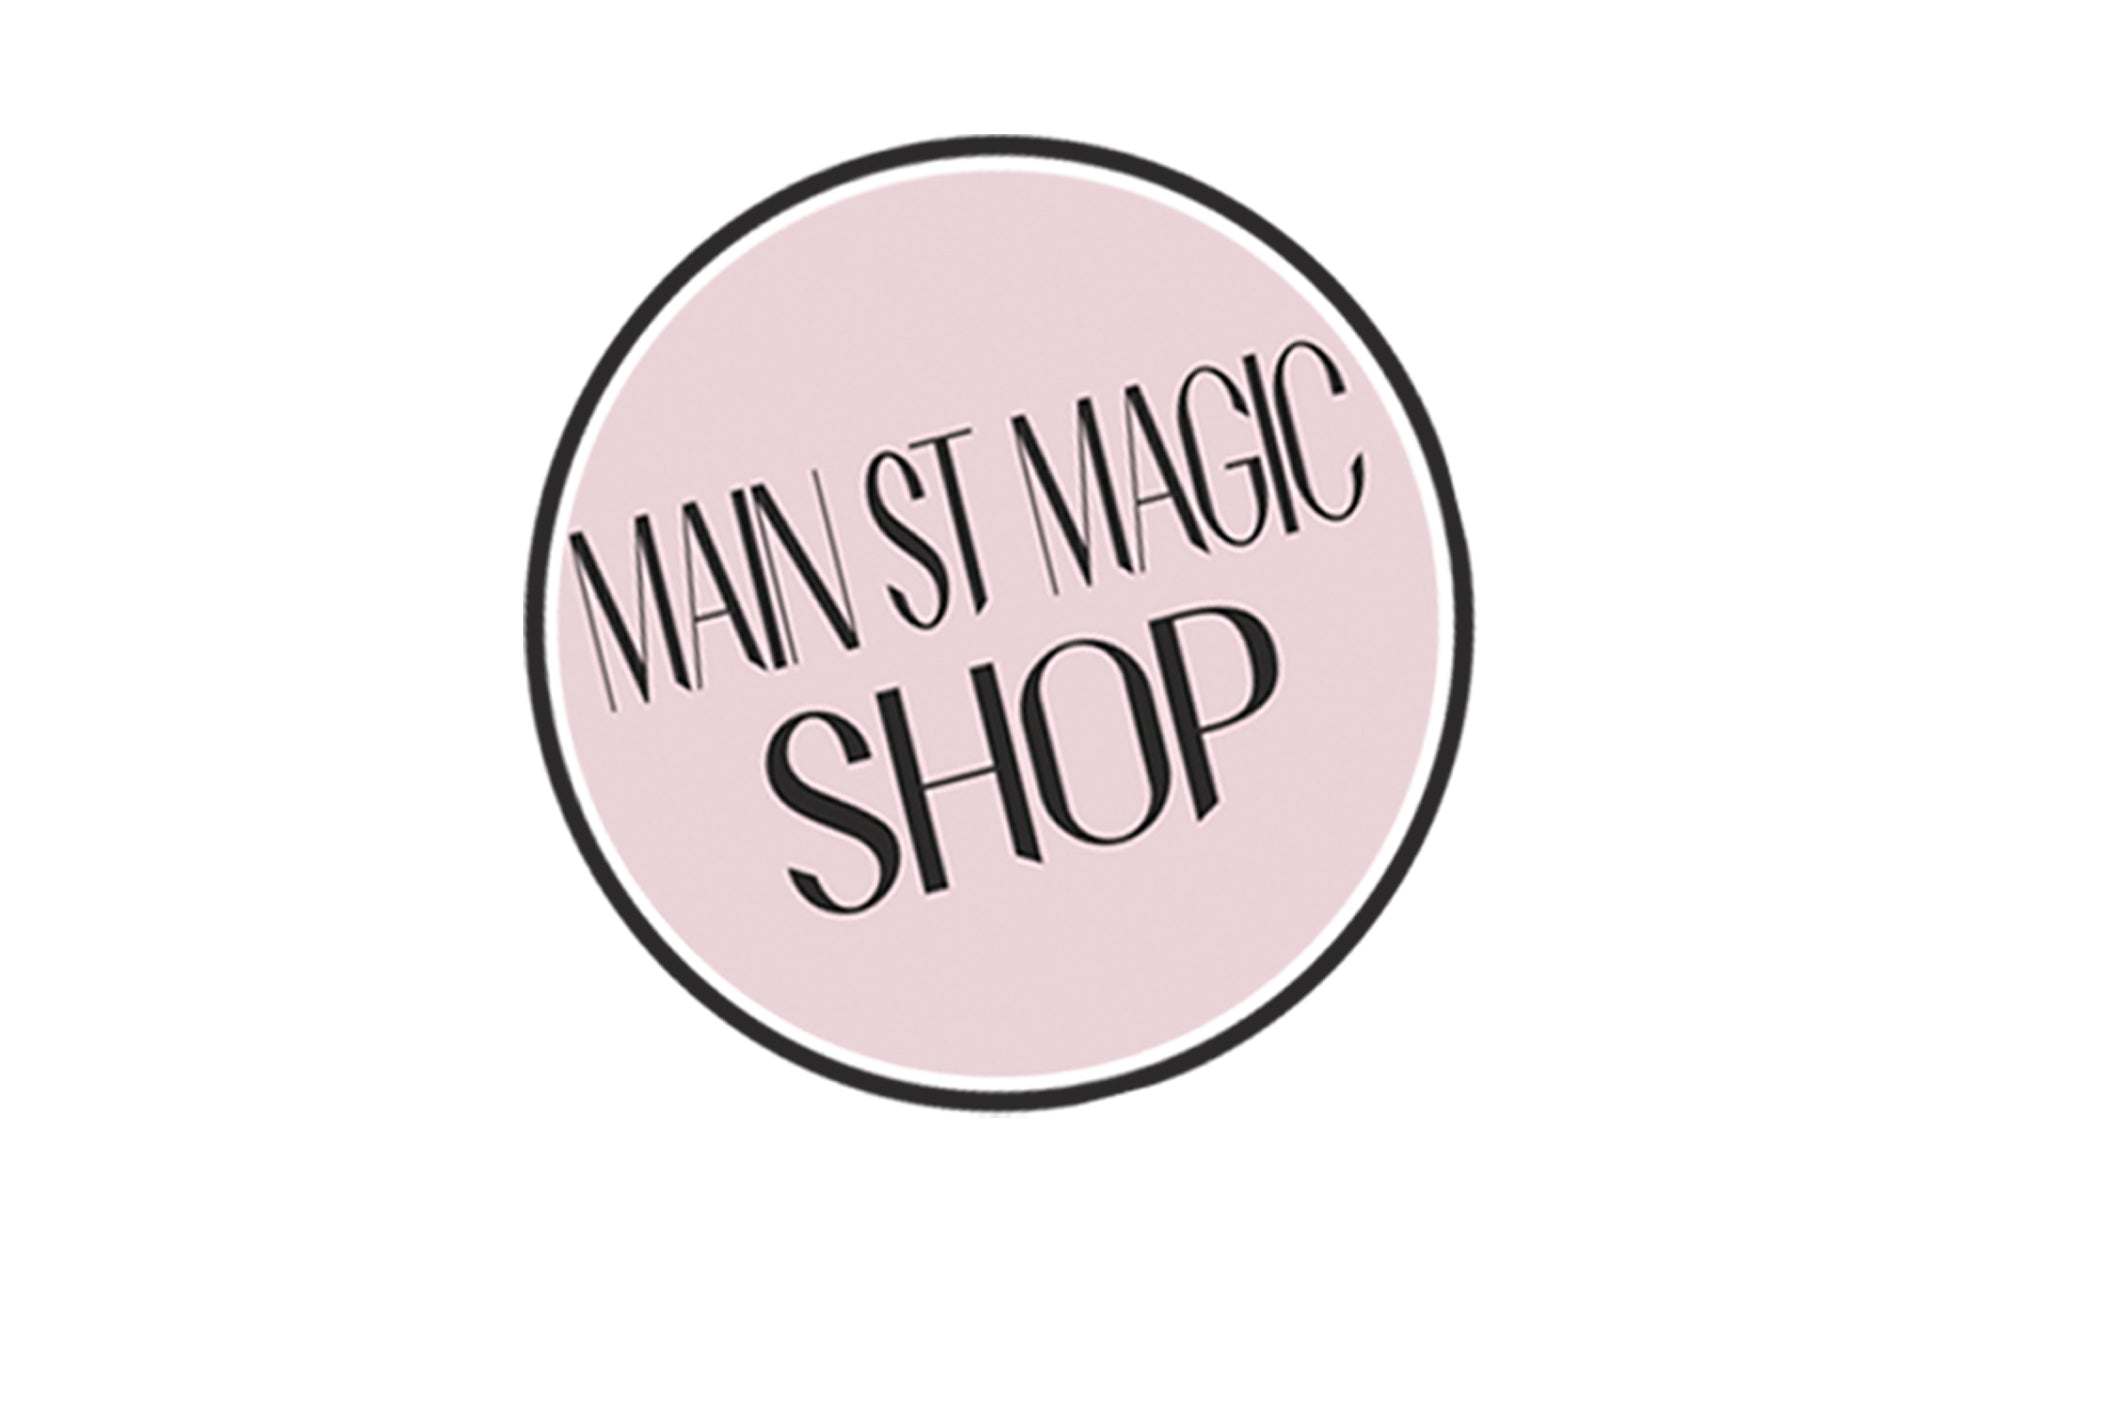 Main St Magic Shop